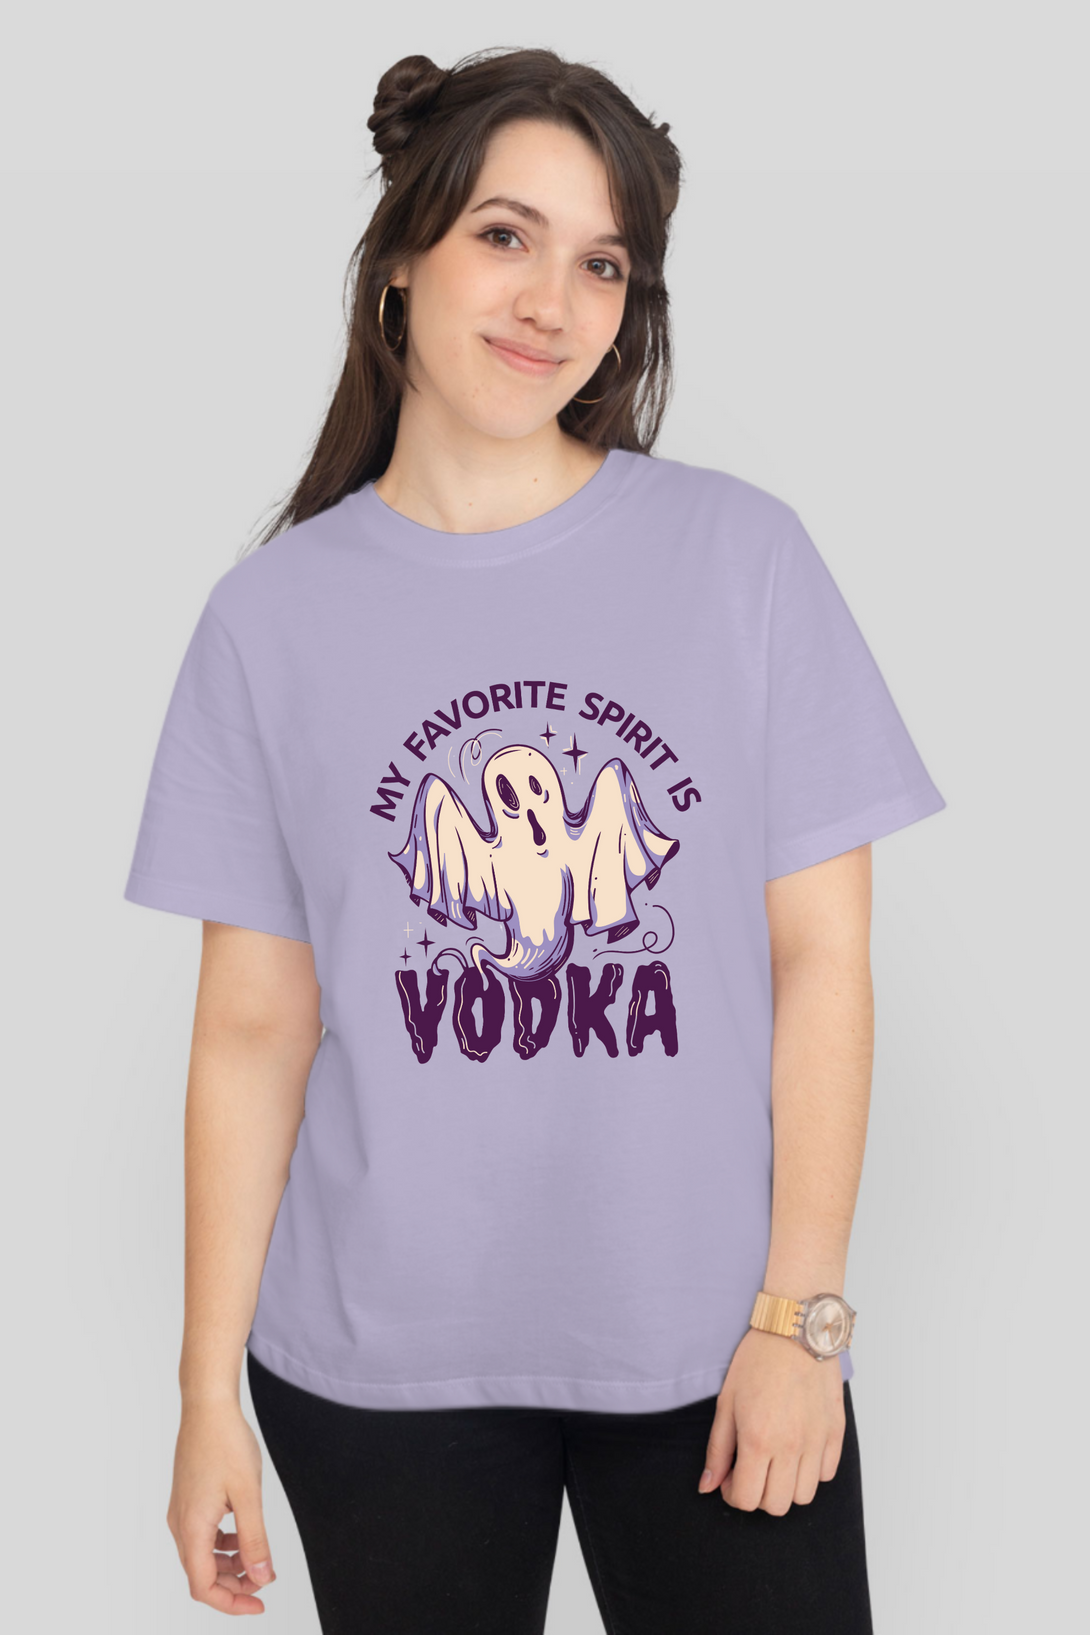 My Favourite Spirit Is Vodka Printed T-Shirt For Women - WowWaves - 9